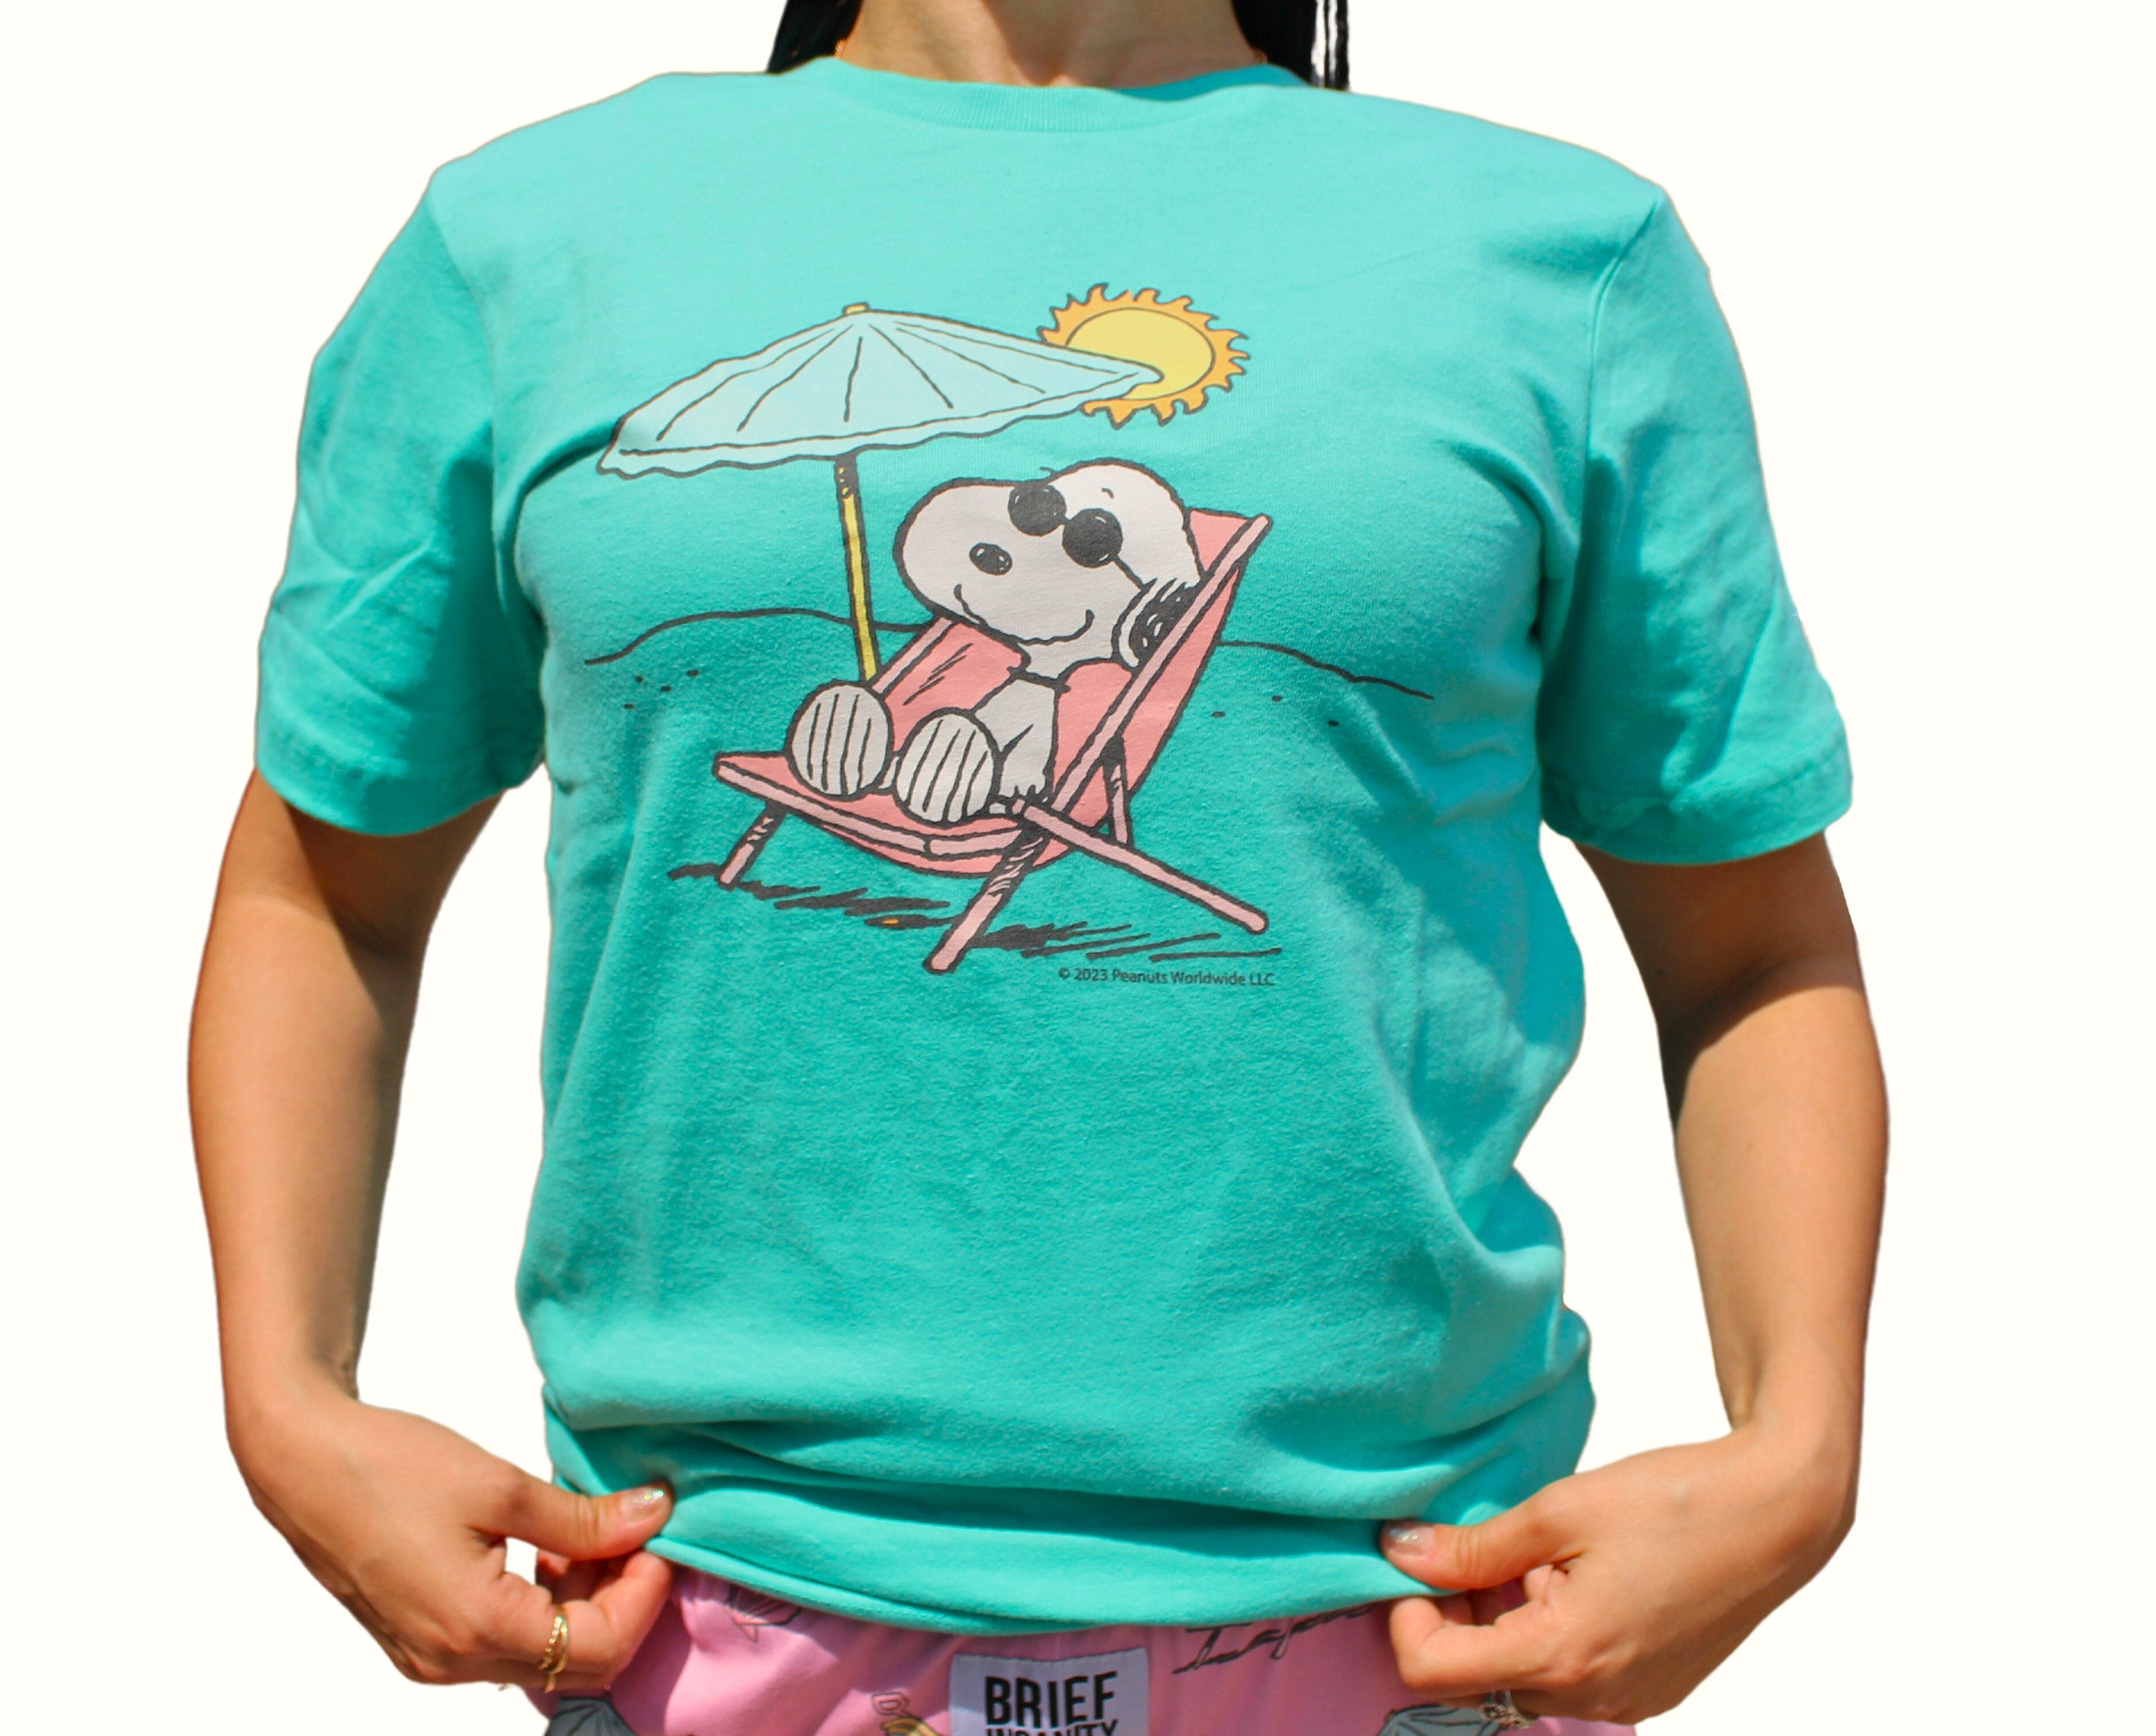 BRIEF INSANITY Peanuts Snoopy Beach Shirt on model.